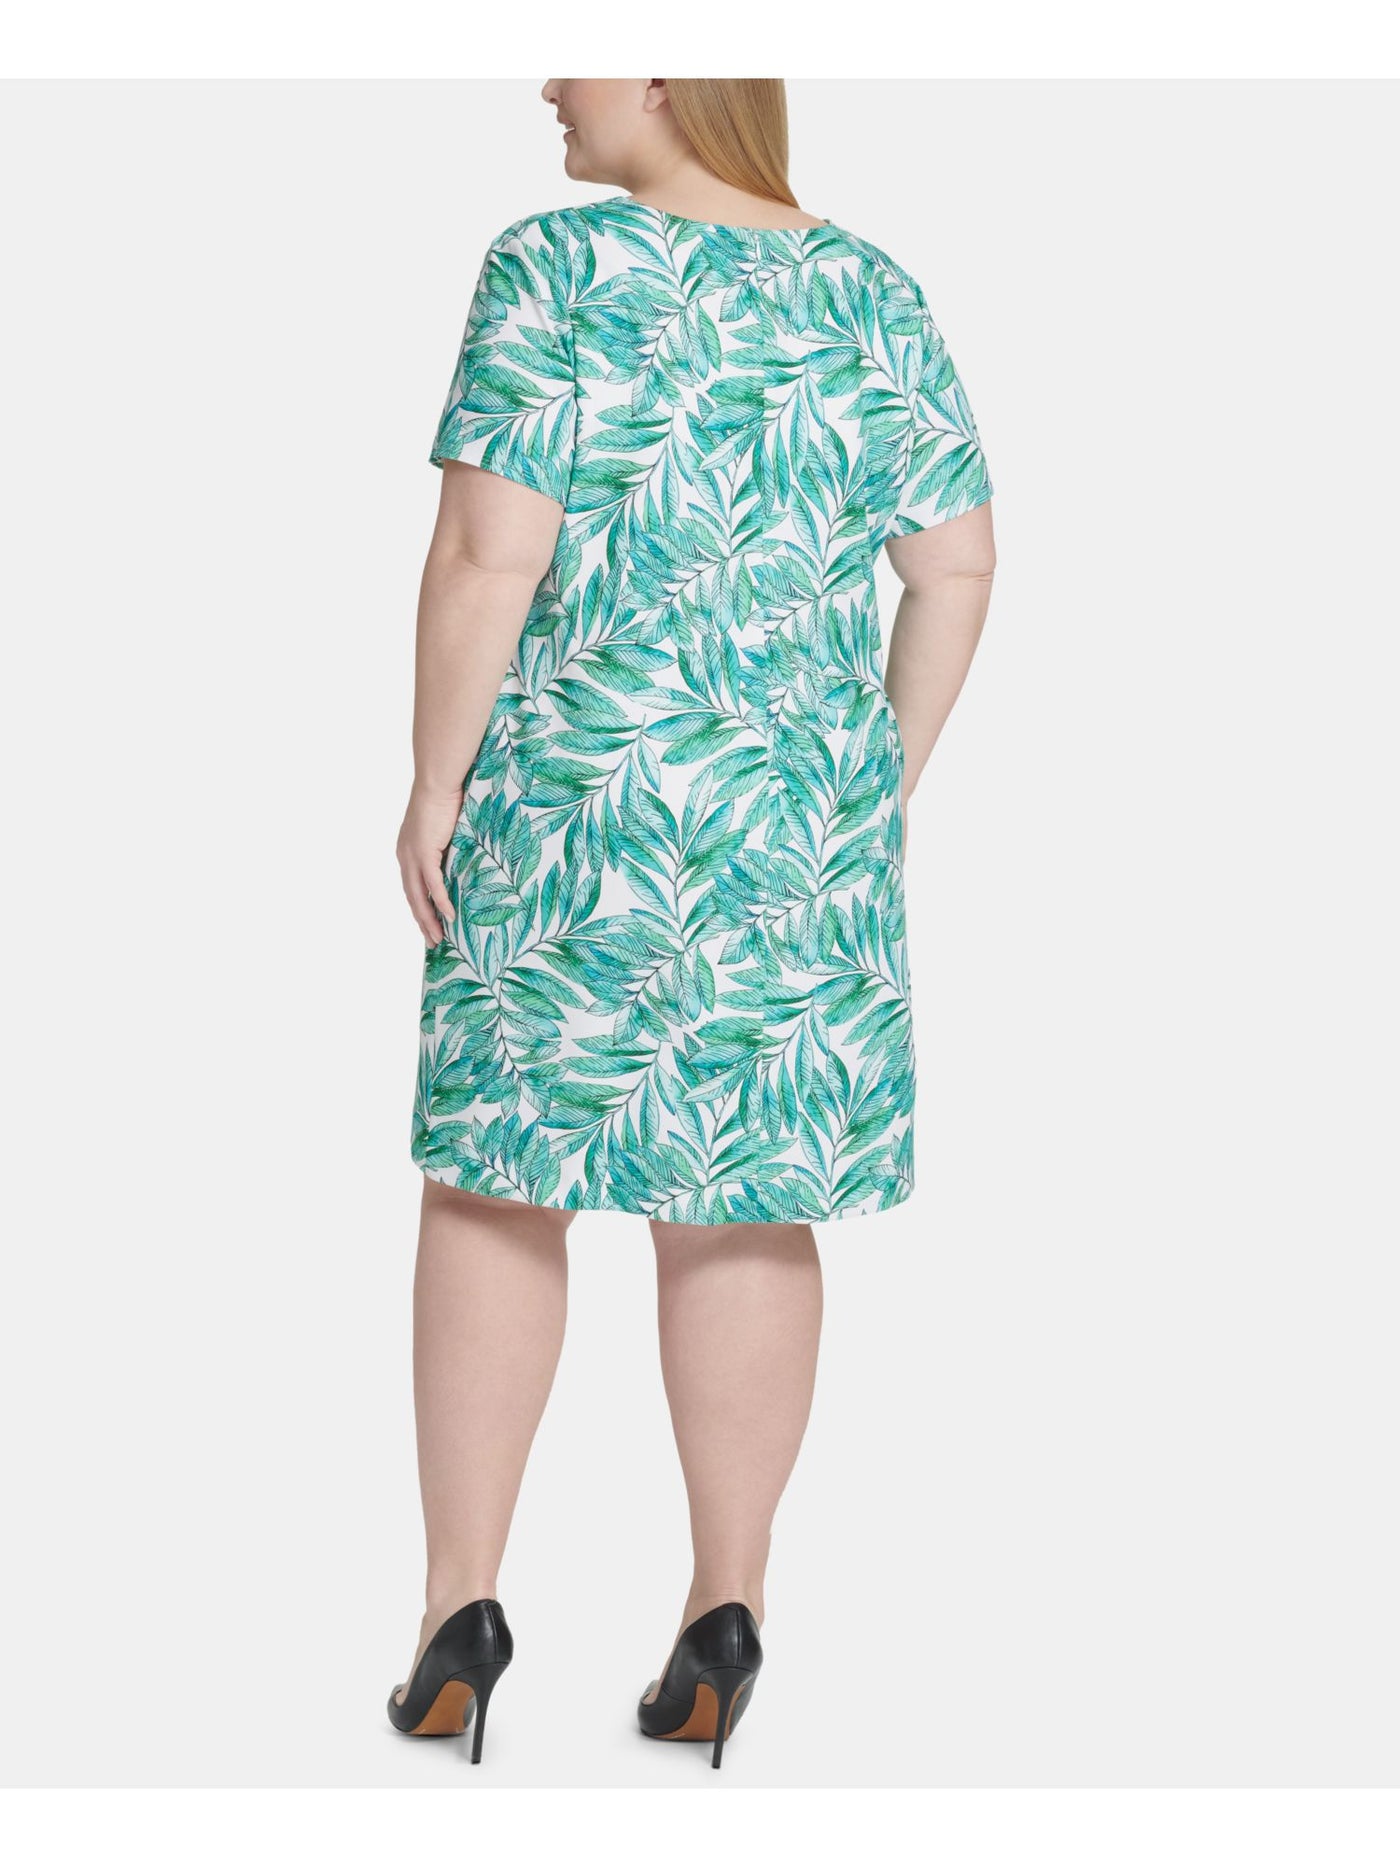 TOMMY HILFIGER Womens Green Printed Short Sleeve Keyhole Knee Length Shift Dress Plus 14W